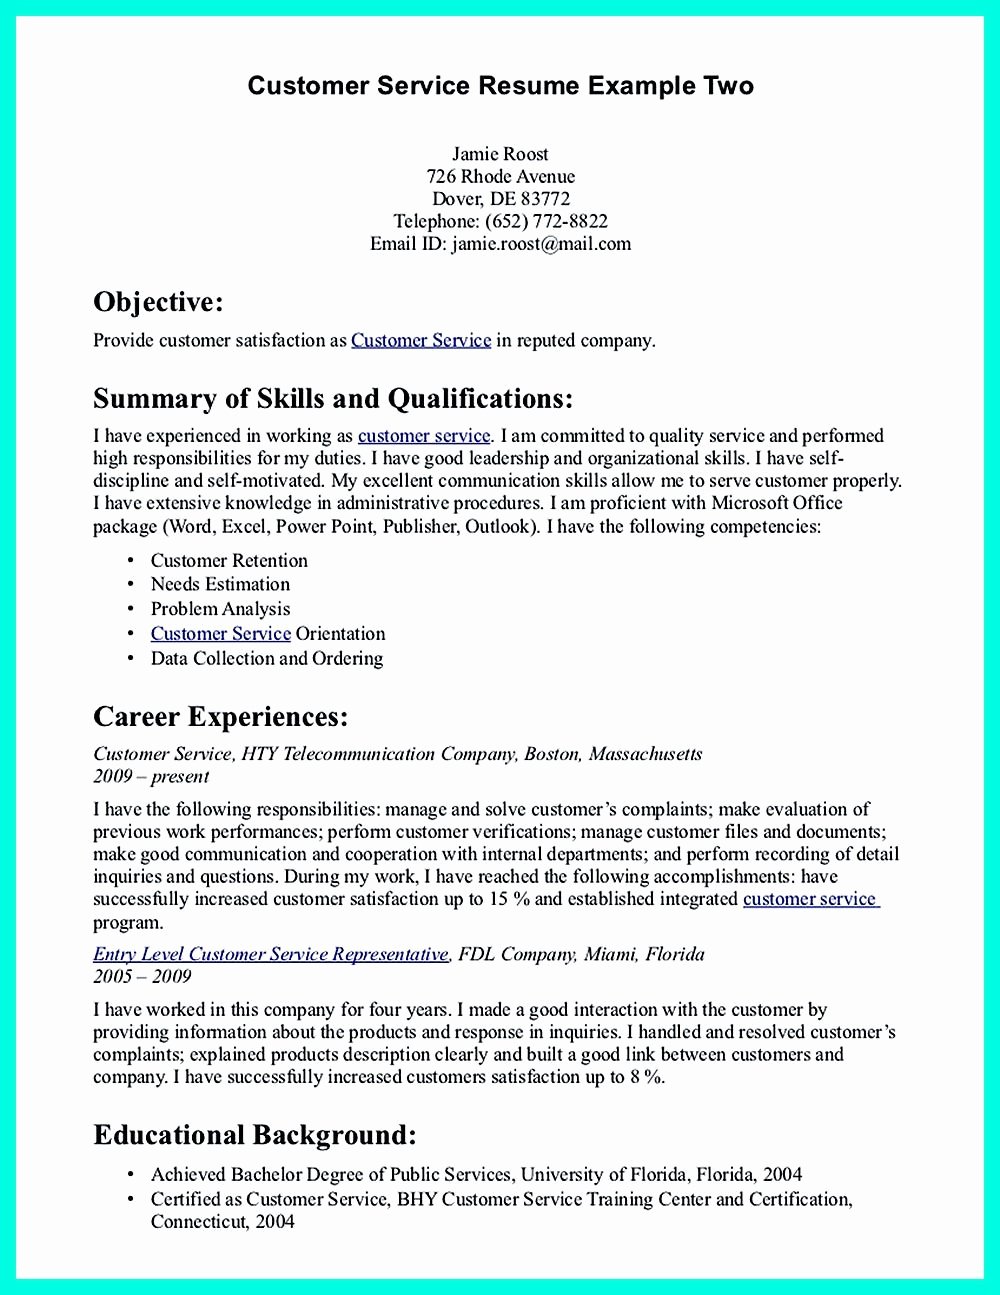 Csr Resume or Customer Service Representative Resume